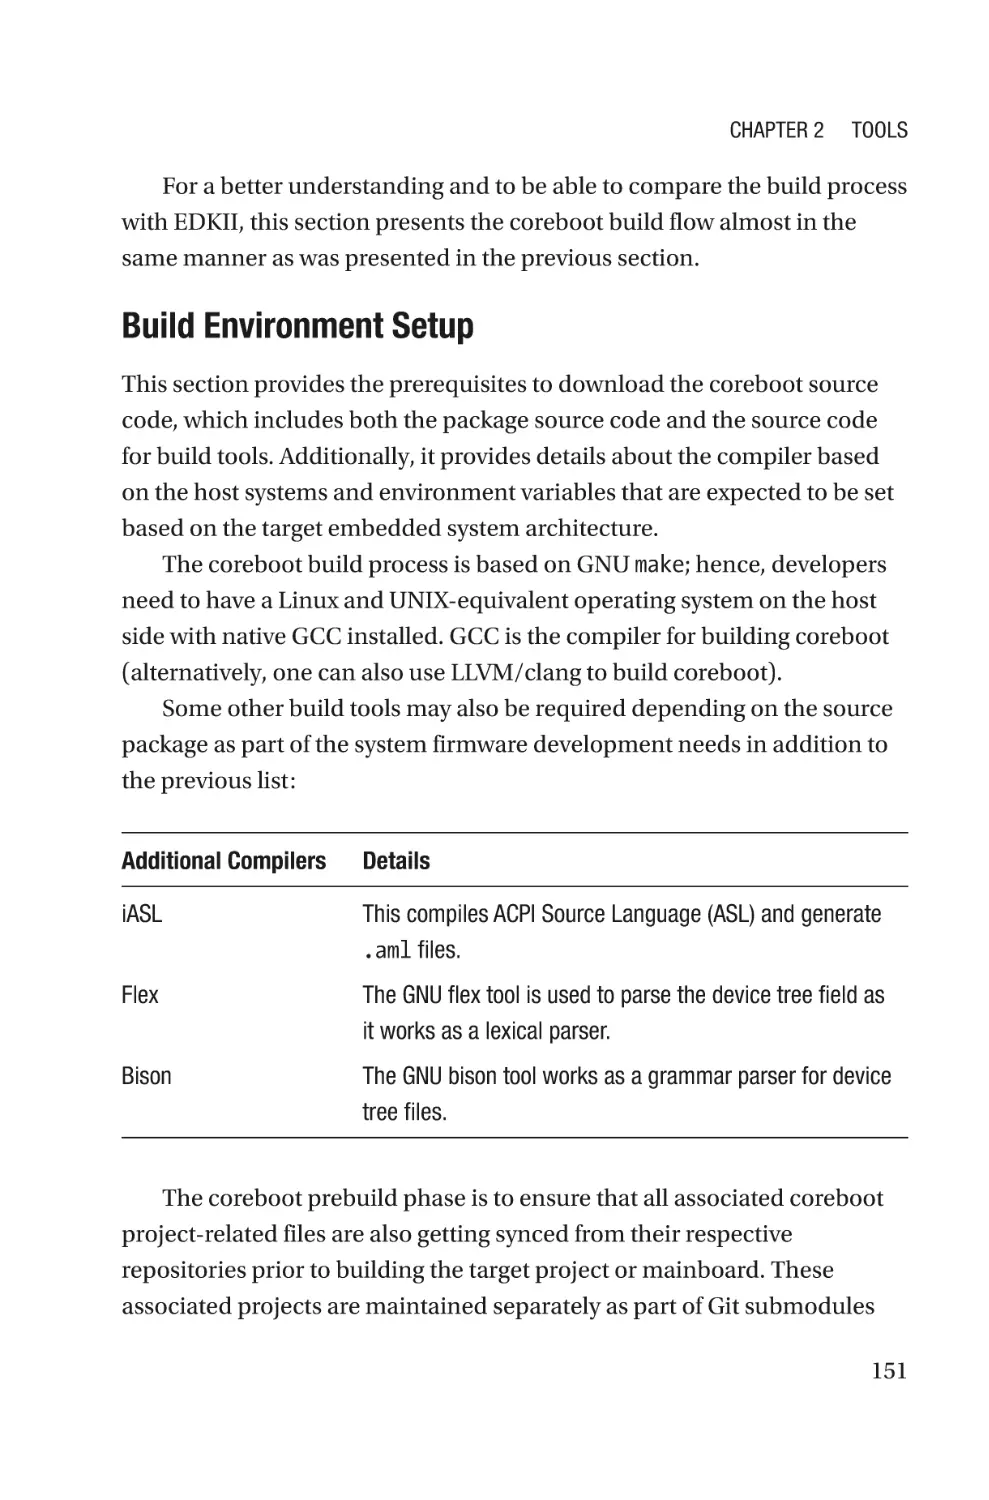 Build Environment Setup